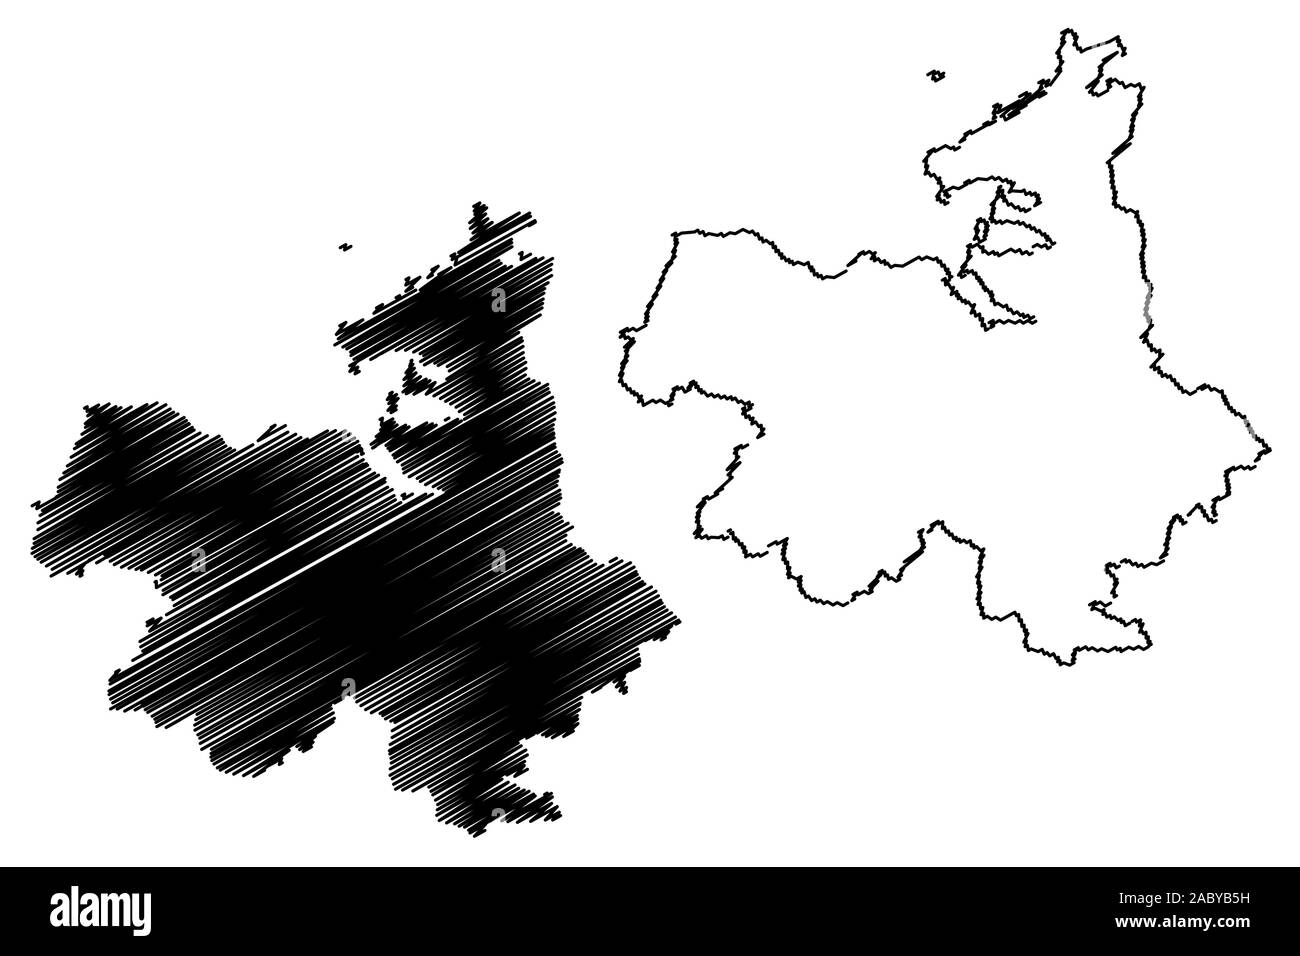 Sligo County Council (Irland, Grafschaften Irlands) Karte Vektor-illustration, kritzeln Skizze, Sligo Karte anzeigen Stock Vektor